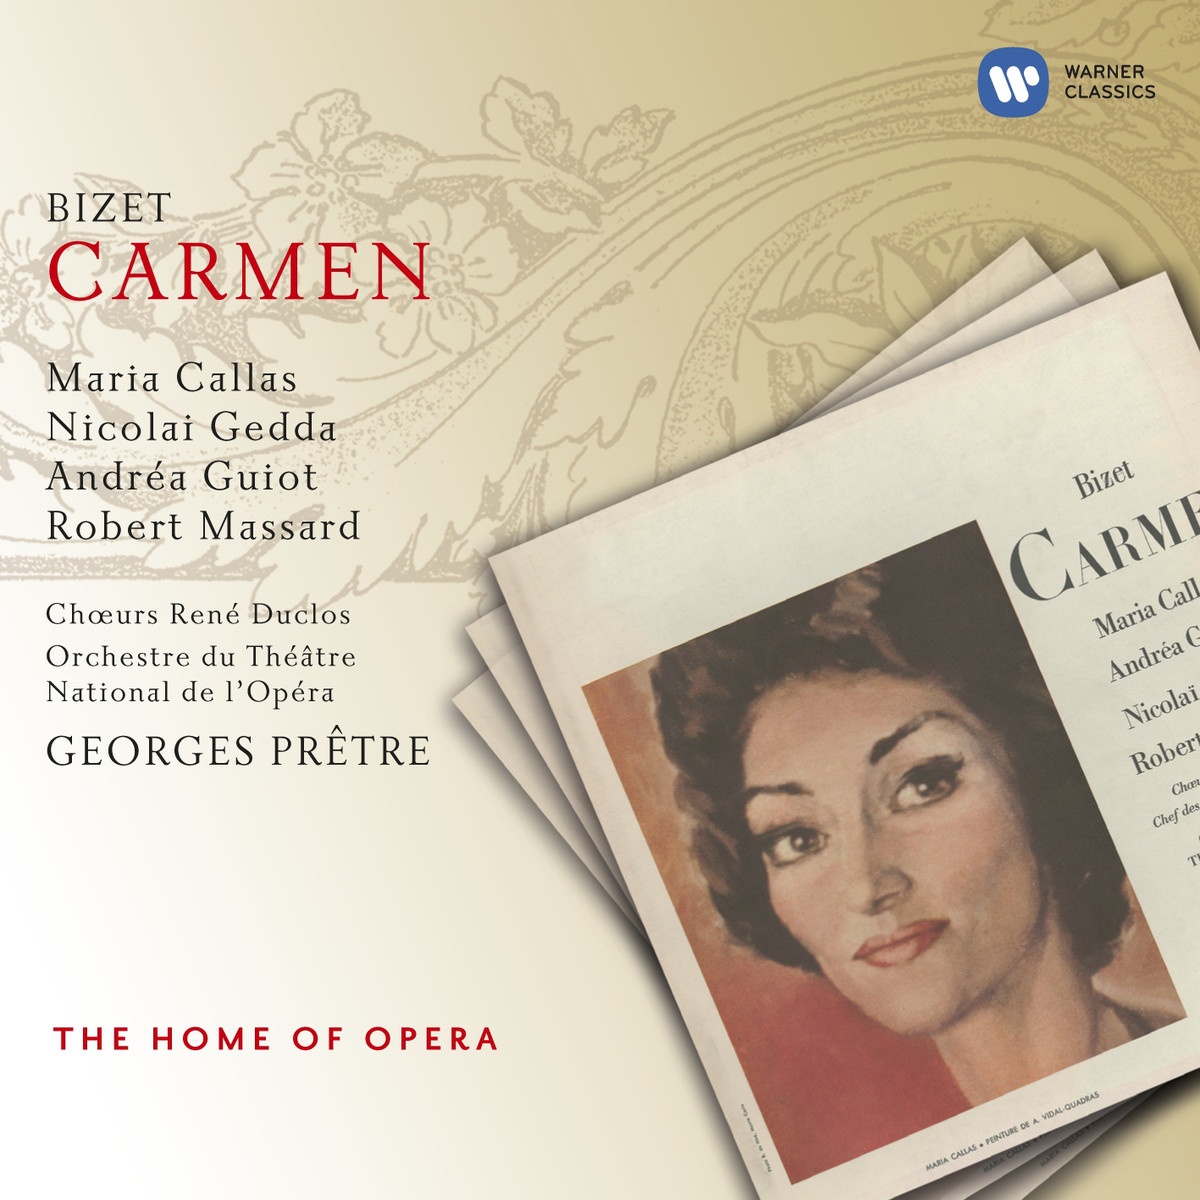 Carmen (1997 Digital Remaster), Act 2: Messieurs, Pastia me dit